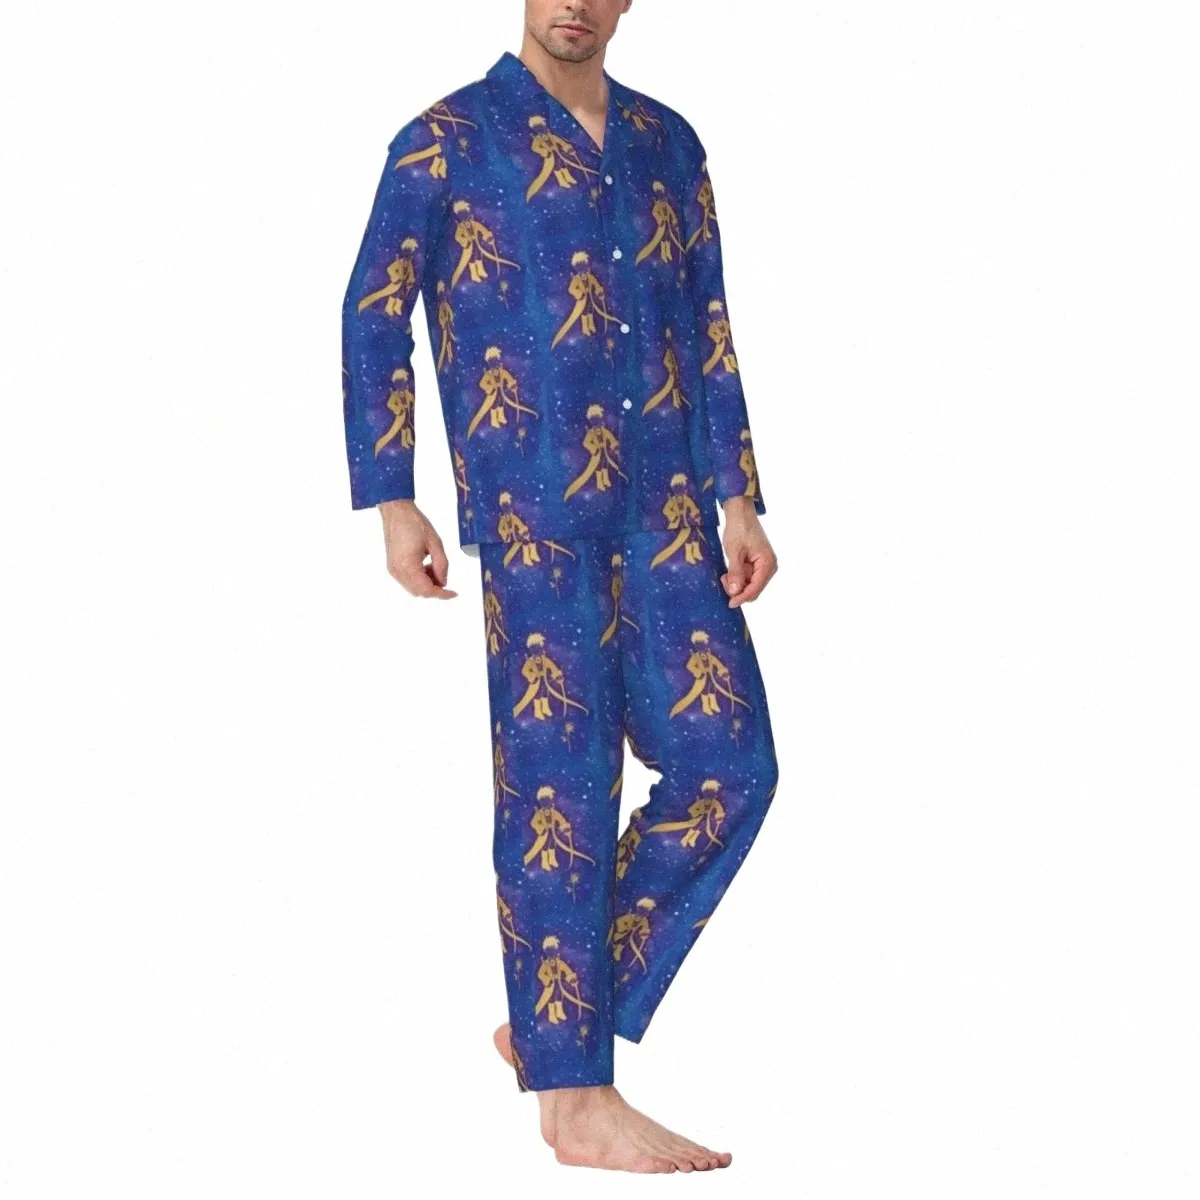 Little Prince Sleepwear Autumn Story Funny Story Print Disual Eversive Pajama Sets Male LG-Sleeve لطيفًا ناعمًا للنمط المنزلي بدلة المنزل W15F#